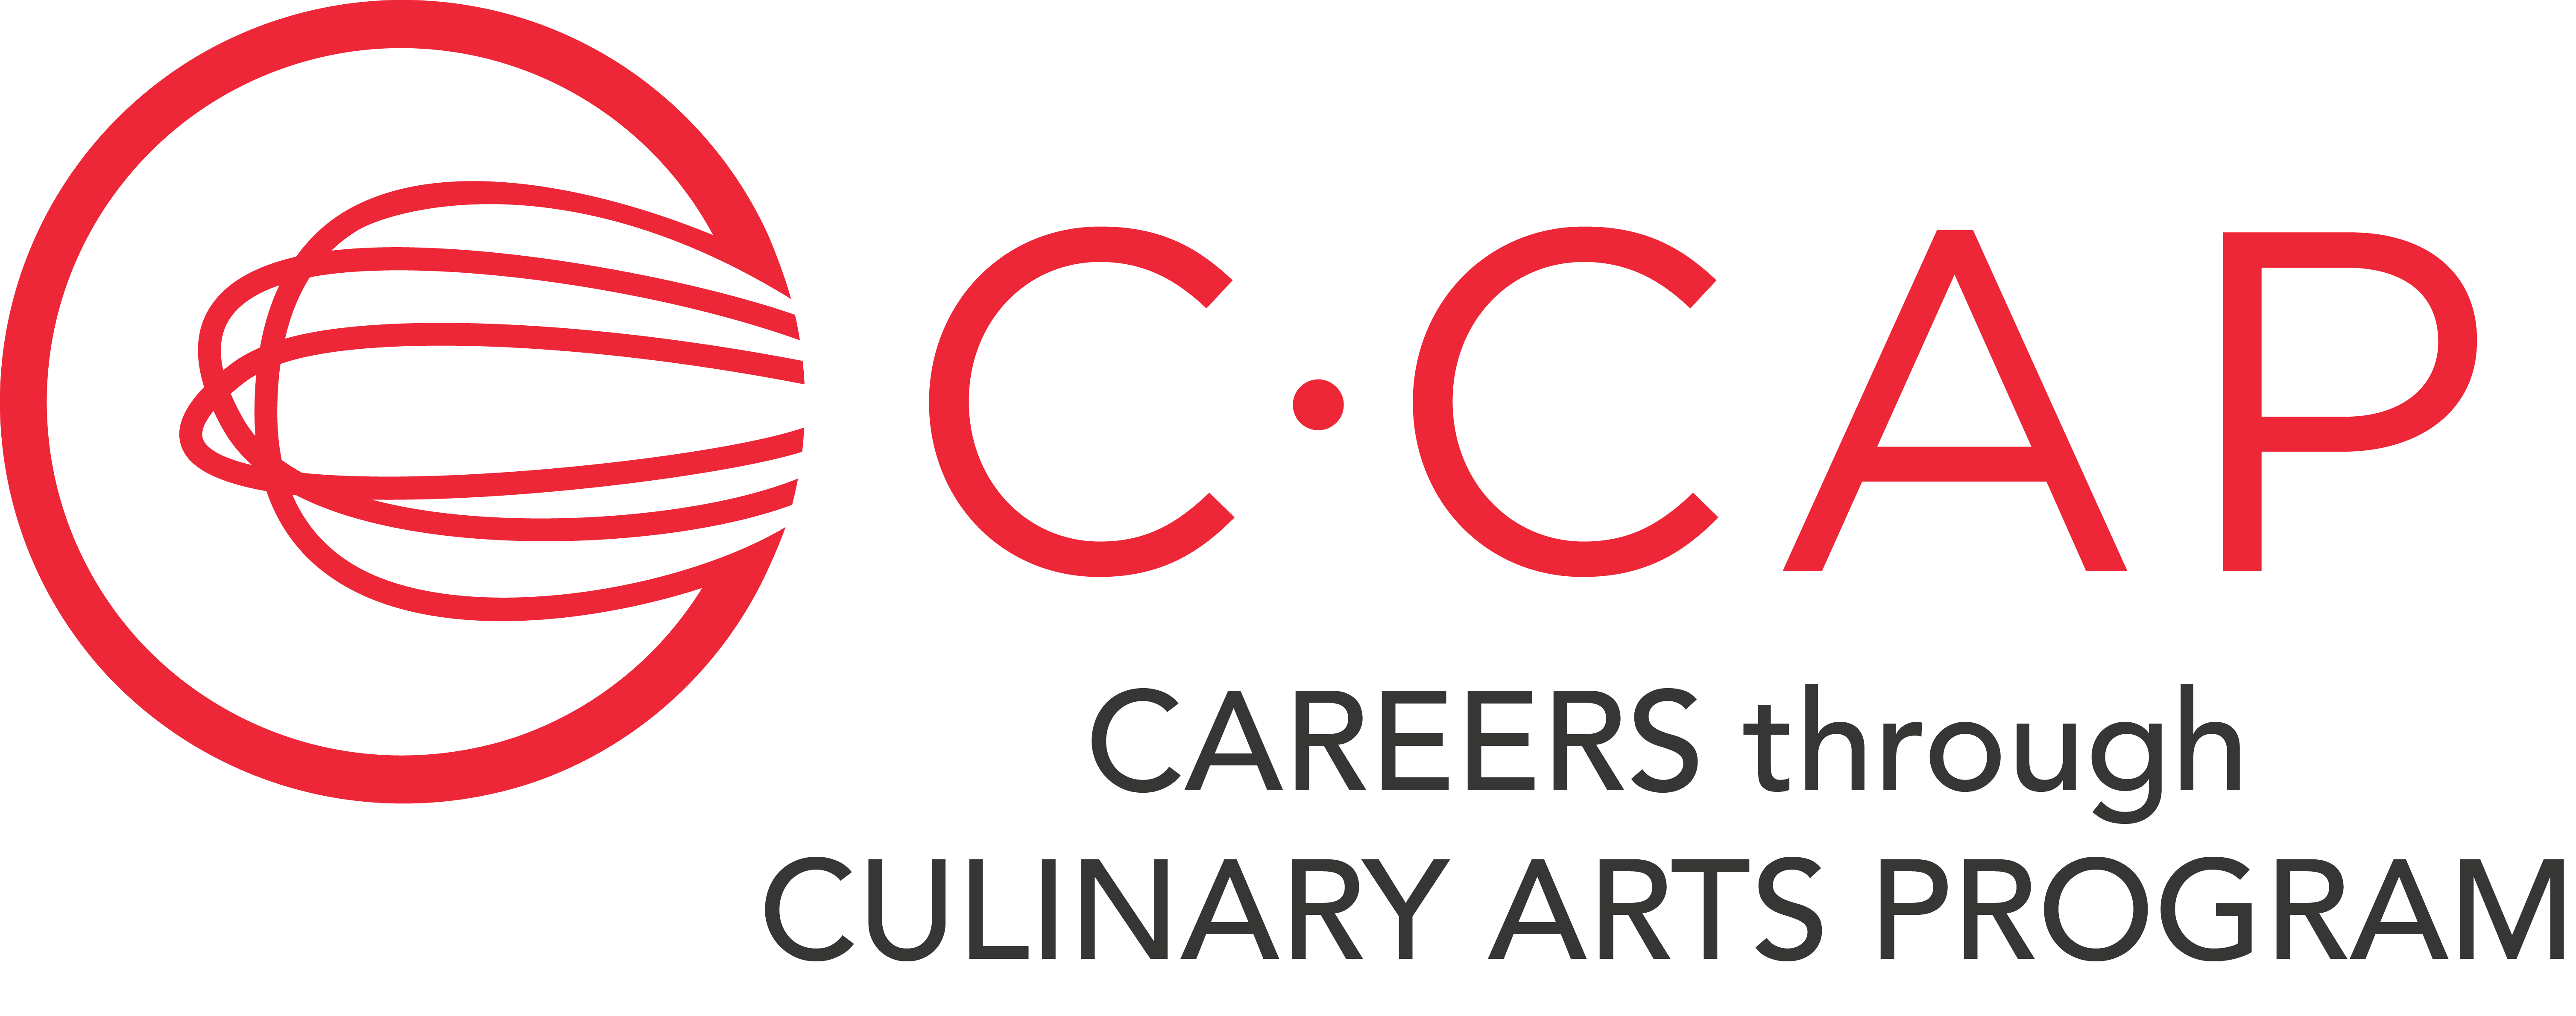 C-CAP_Logo_Full_Long_Red_and_Gray